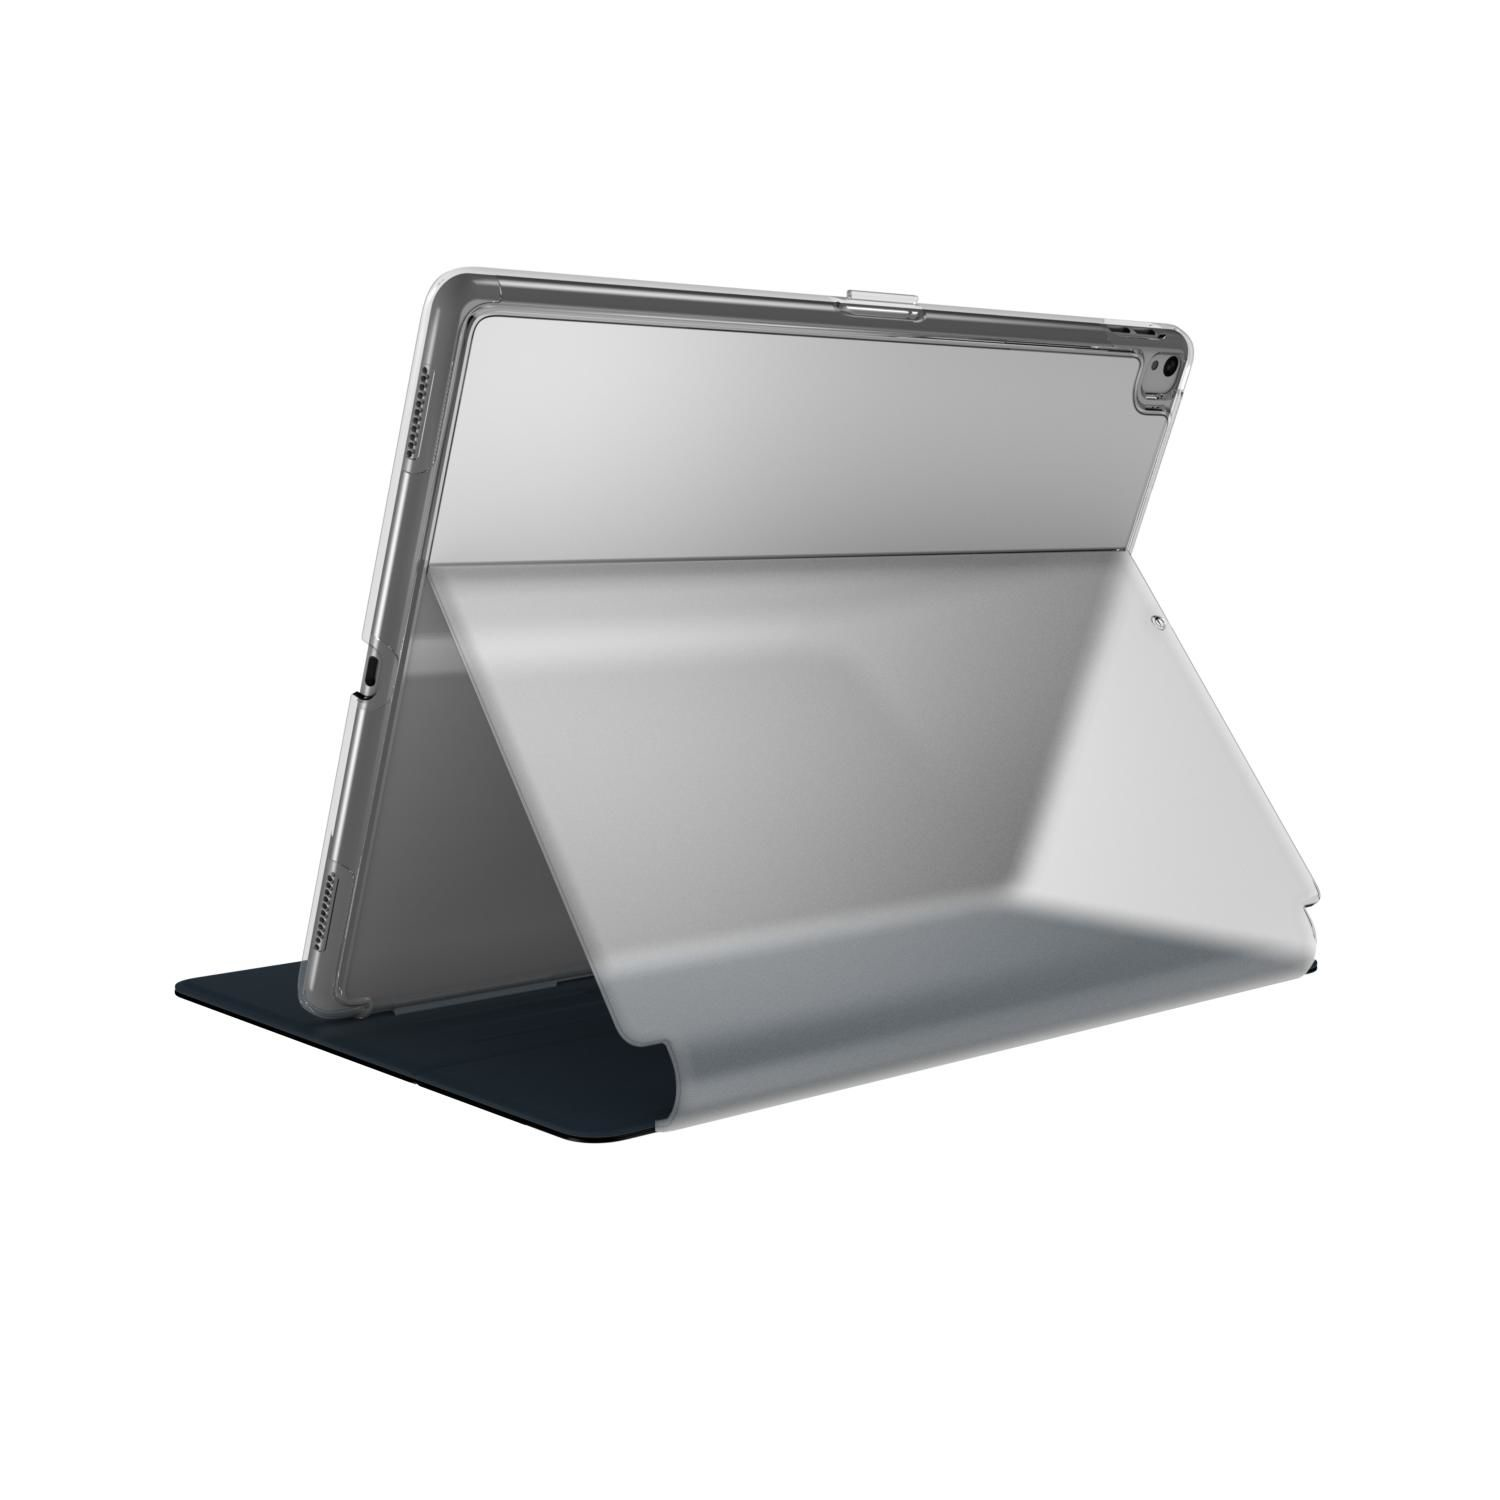 Speck Balance Folio Clear Case Black/Transparent for iPad 9.7 Inch